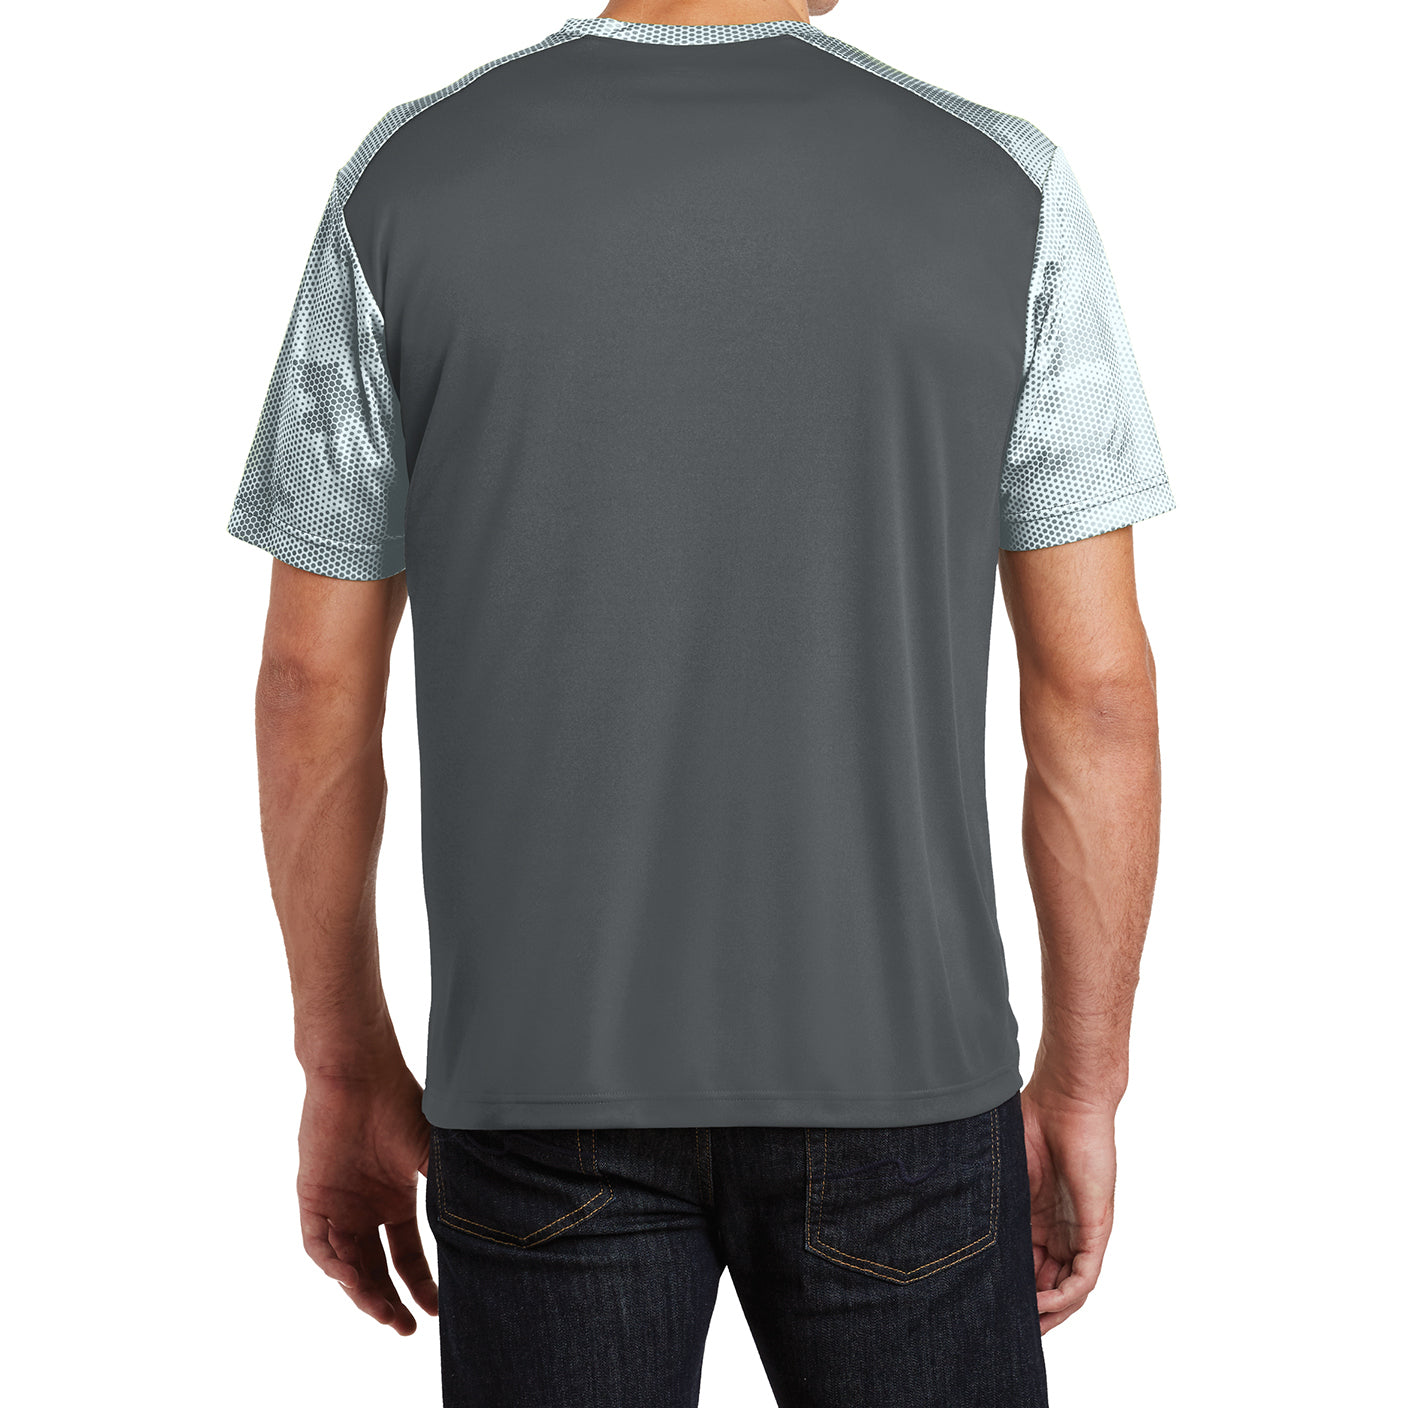 Men's CamoHex Colorblock Tee Shirt Iron Grey/ White Back